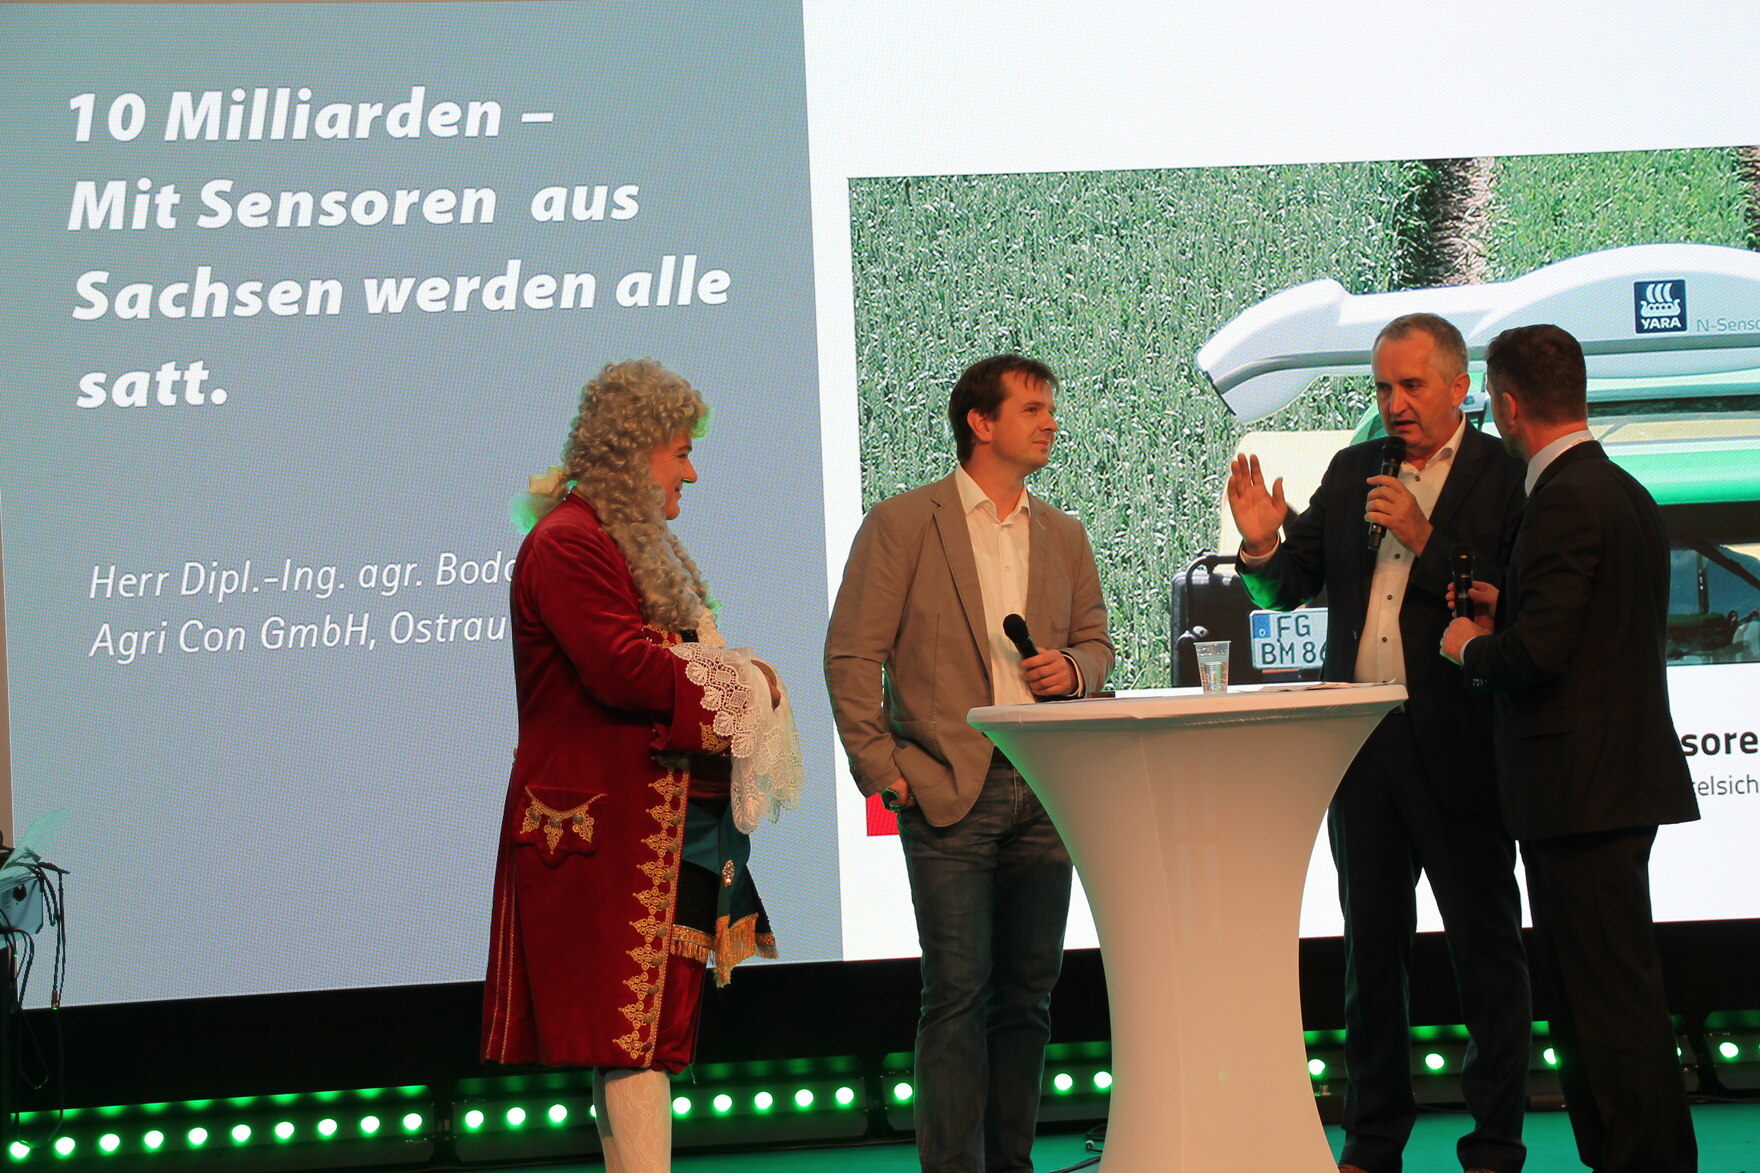 Bodo Hanns erläutert dem Publikum die »Precision Farming-Technik« der Agri Con GmbH.